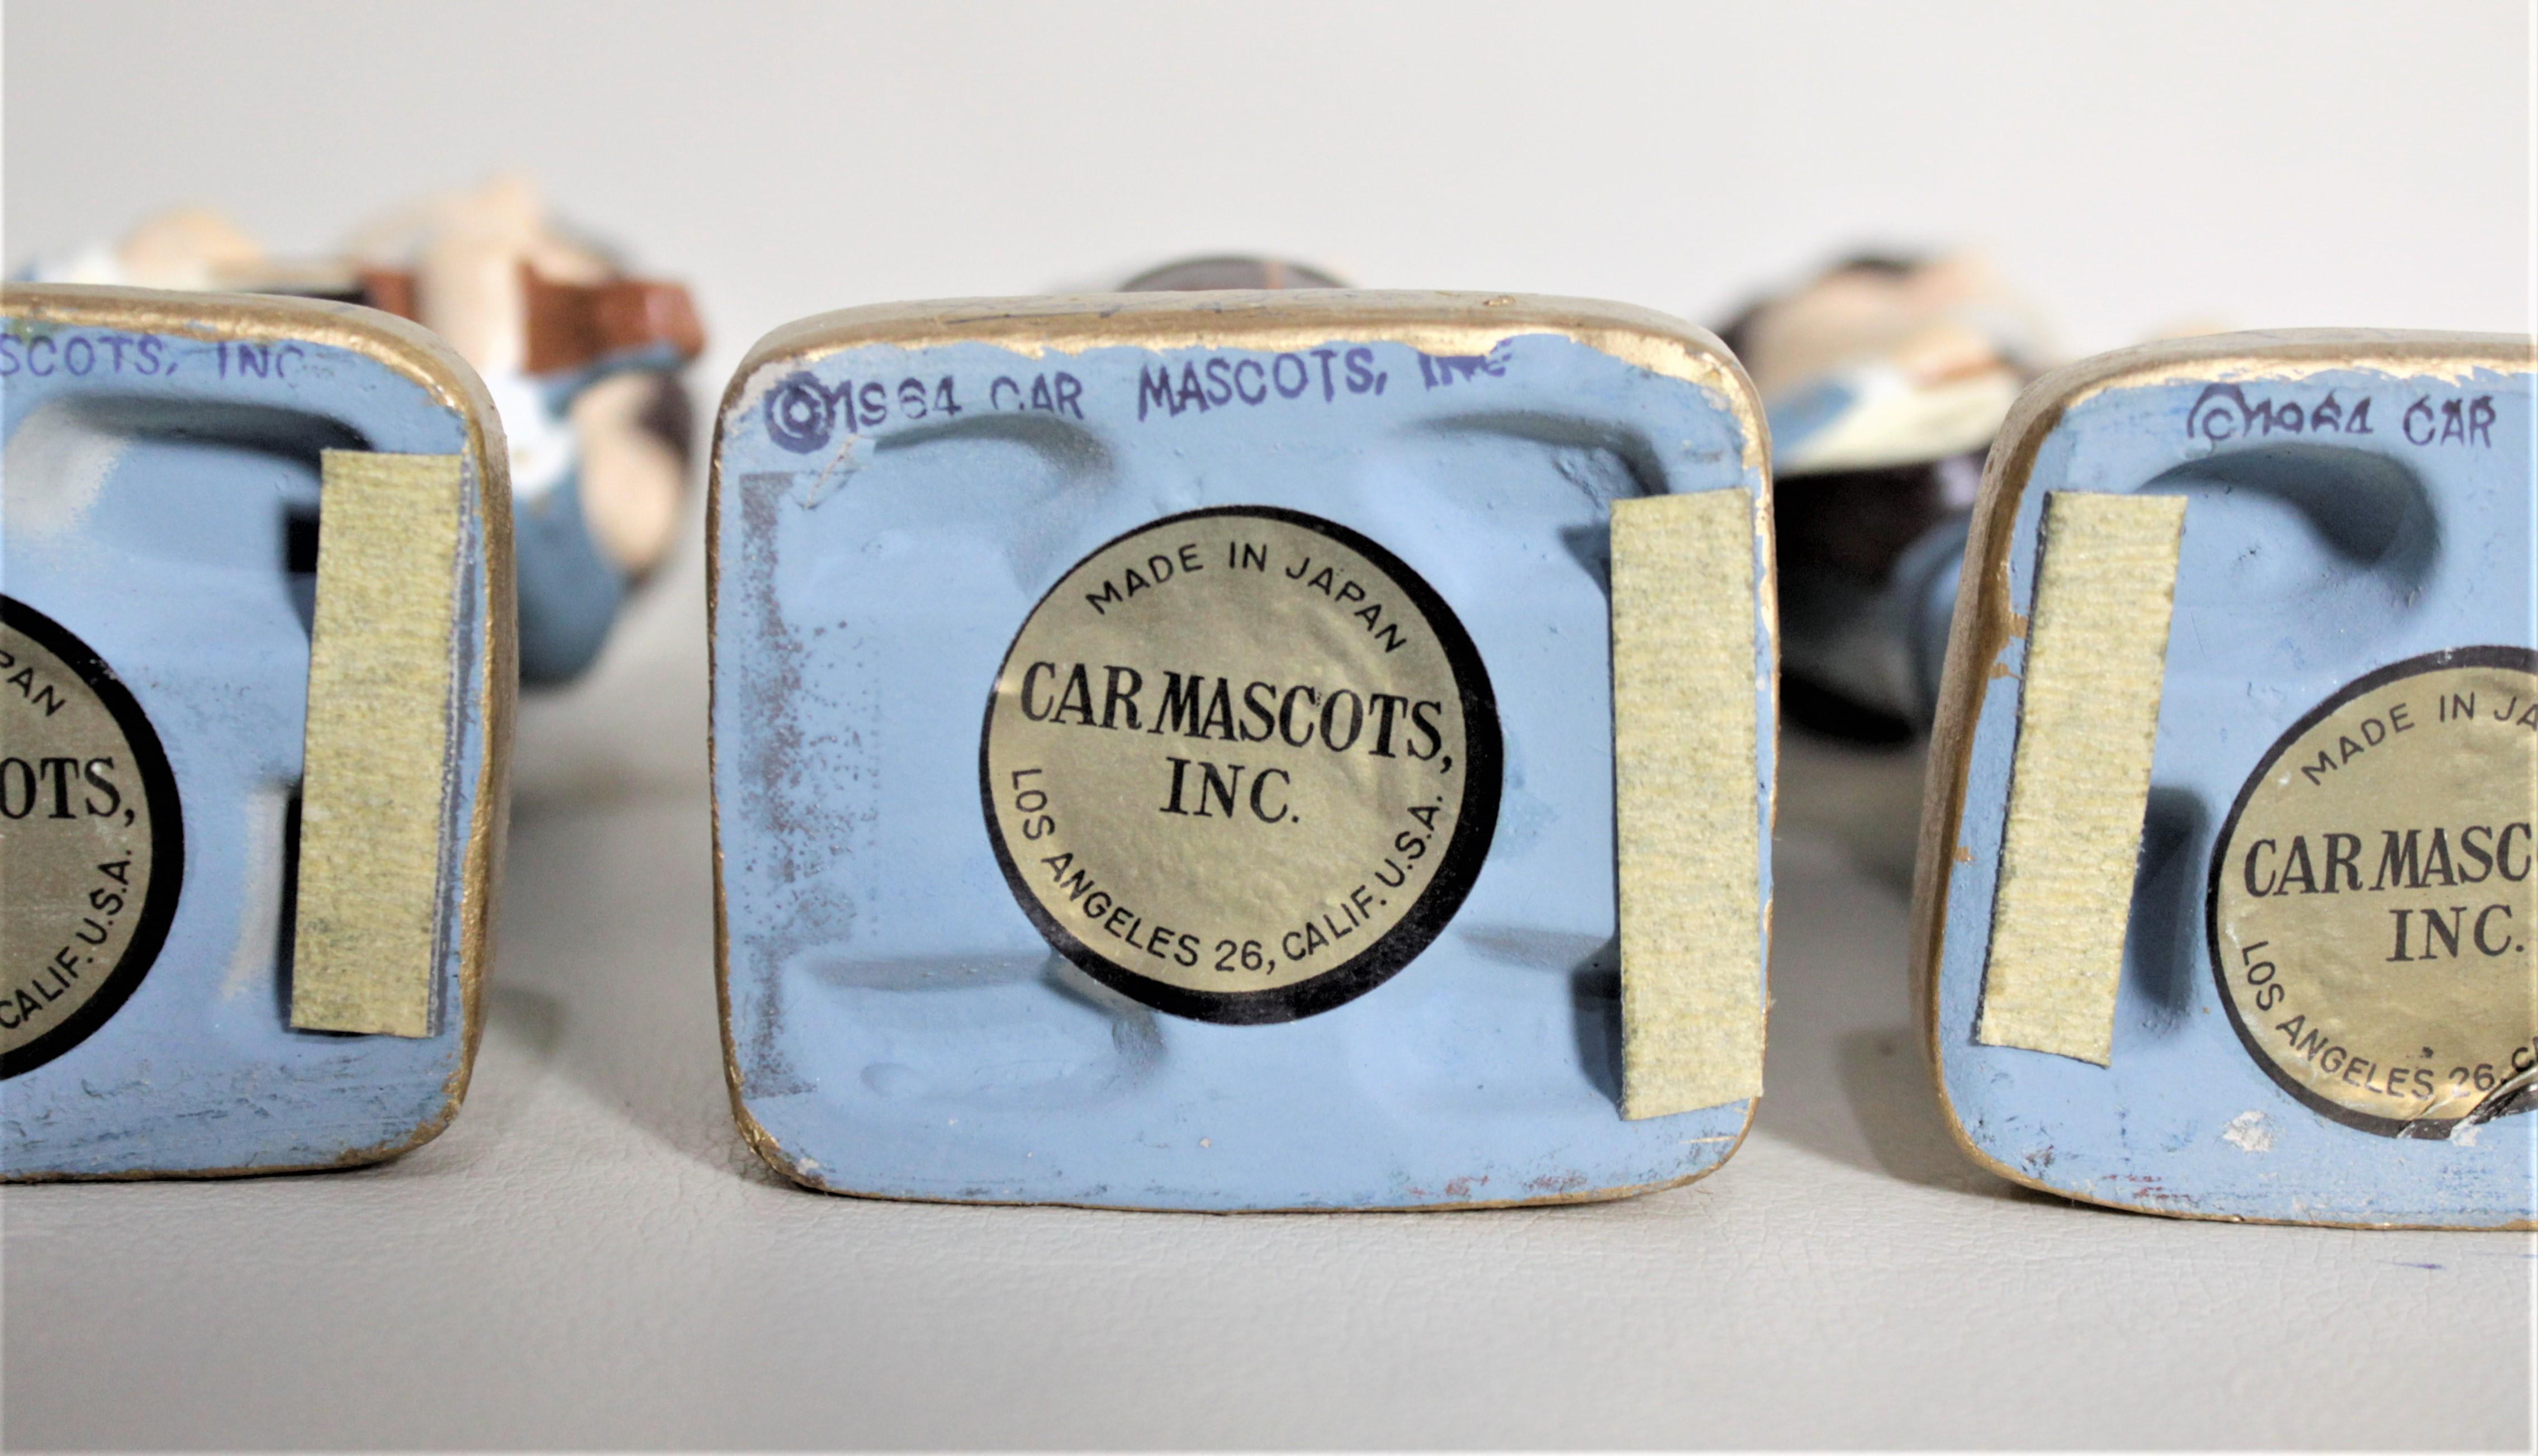 20th Century Original 1964 Beatles Car Mascots Bobblehead Set with Box and Instruction Sheet